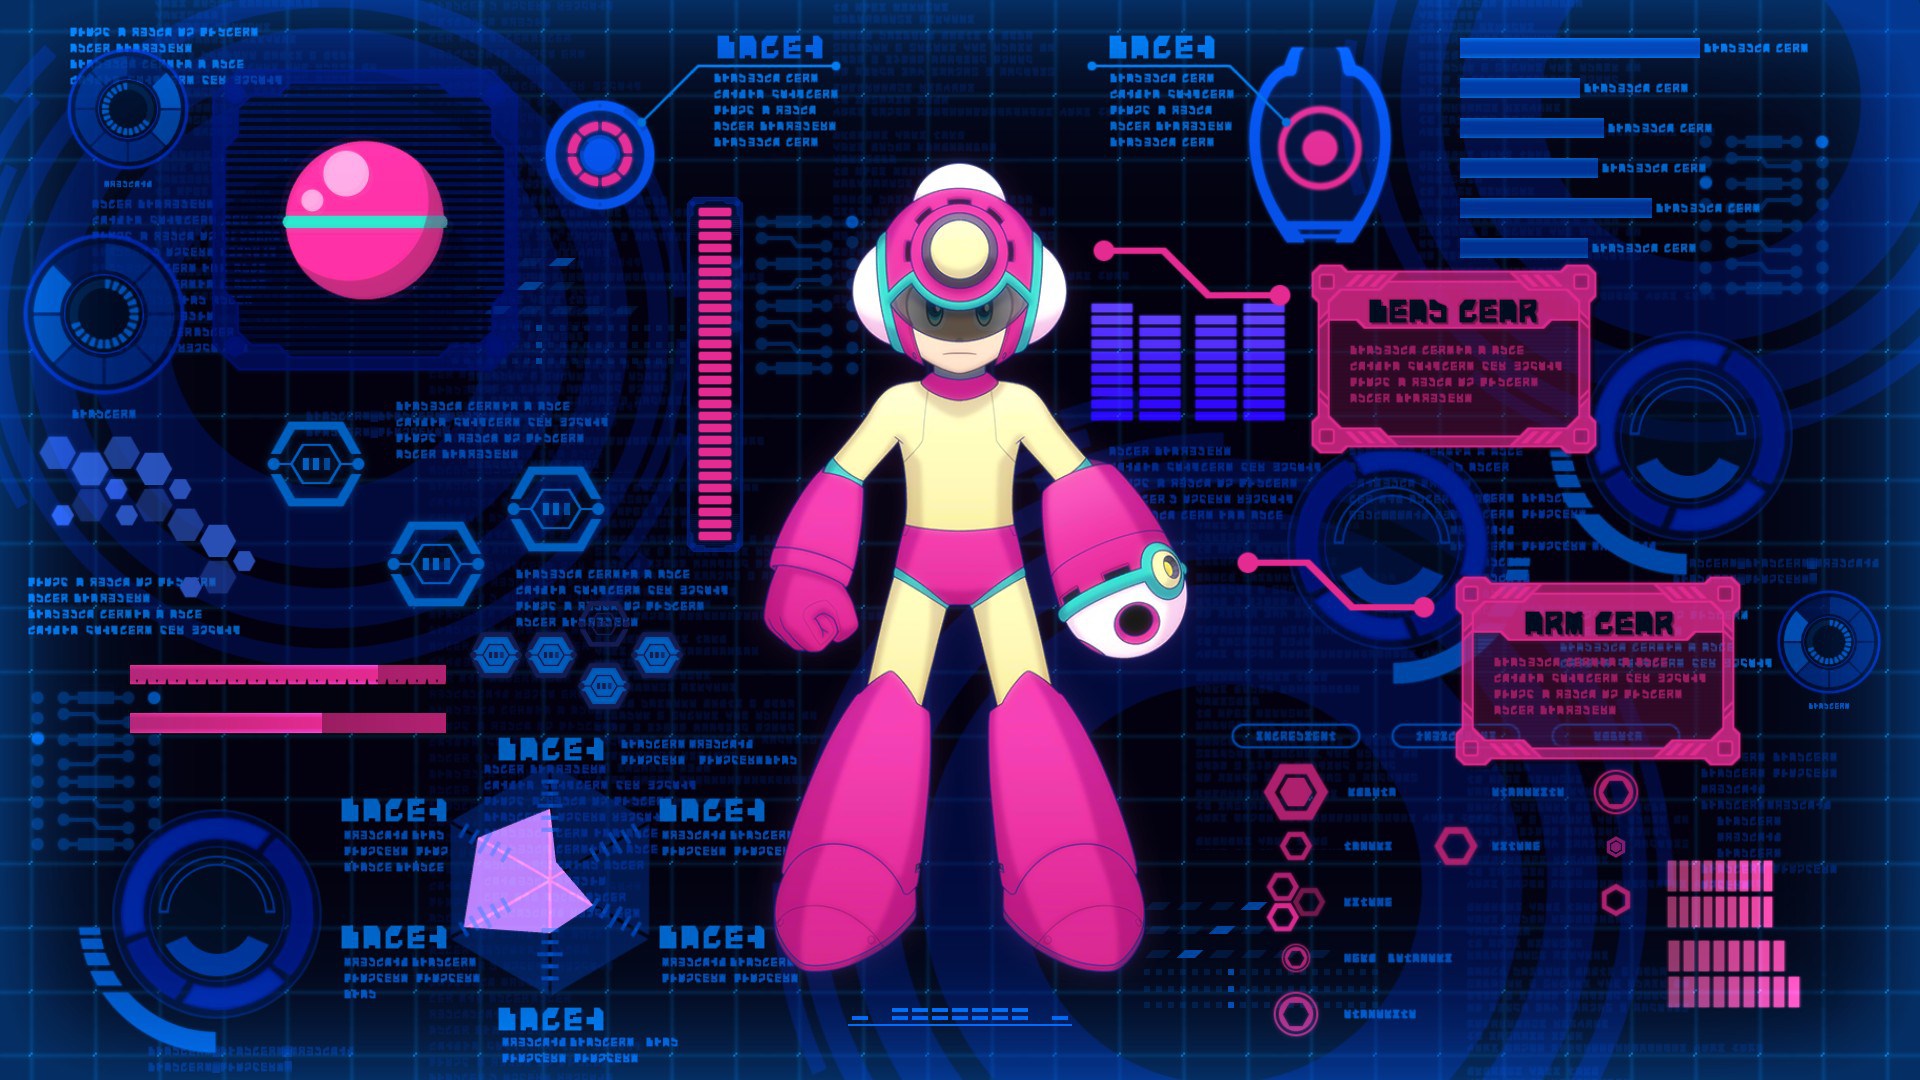 Video Game Mega Man 11 HD Wallpaper | Background Image